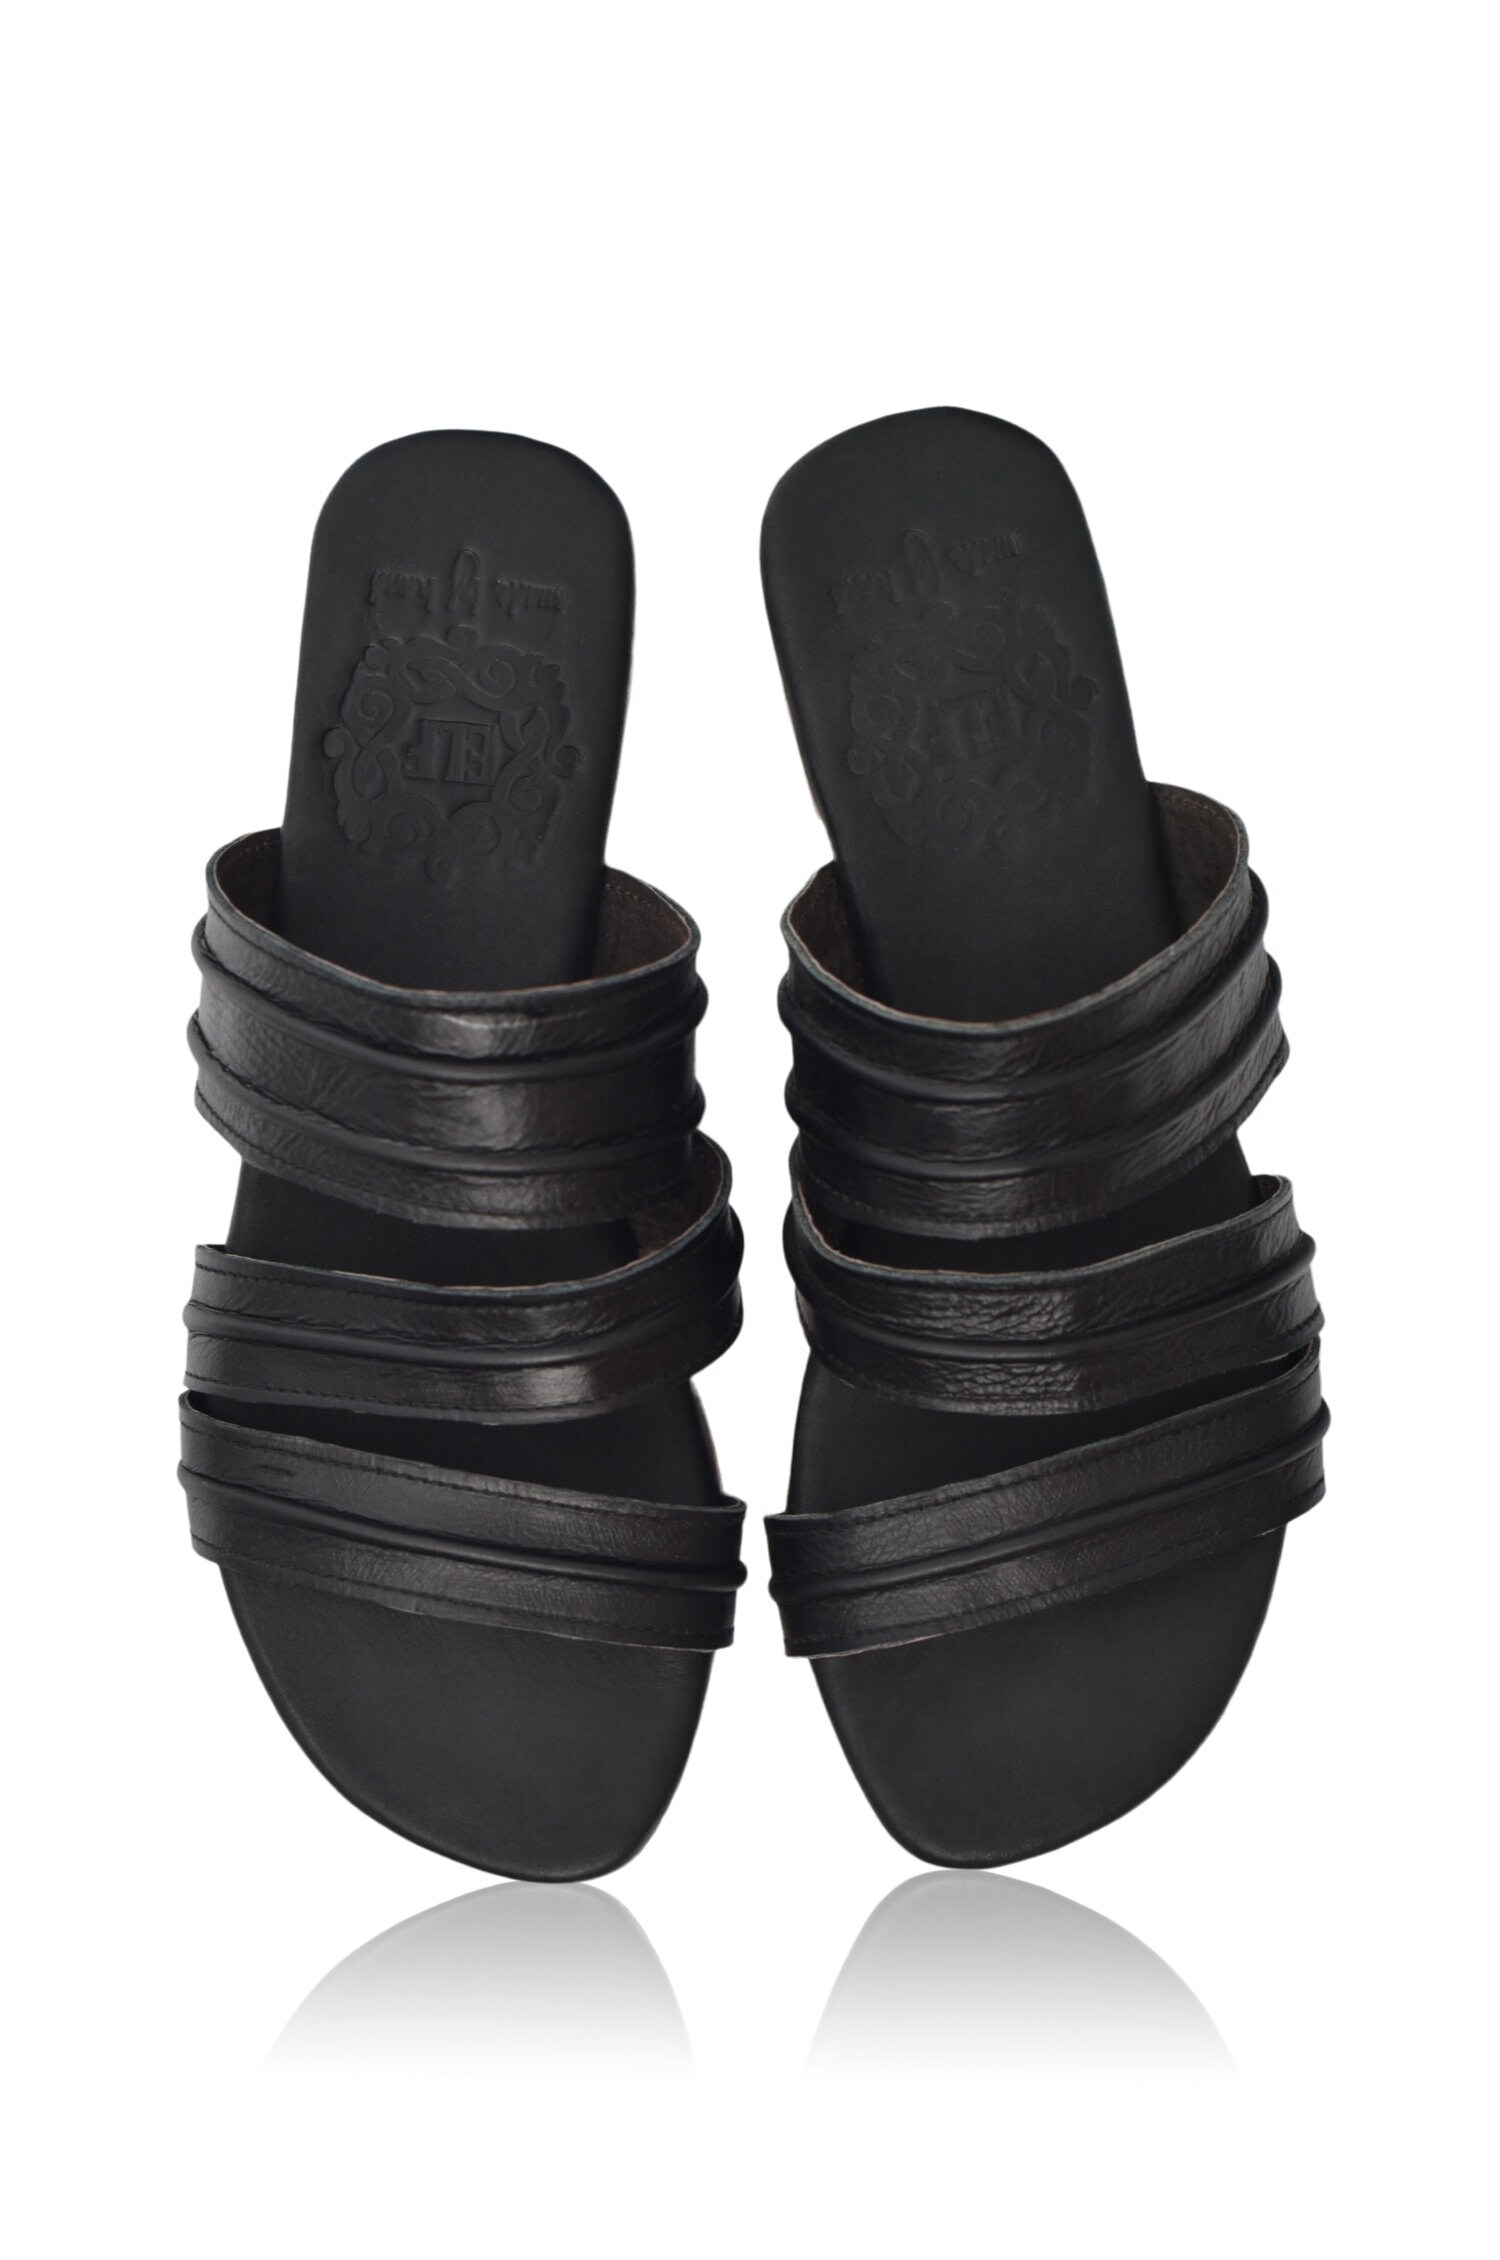 MIRAGE. Leather Flat Sandals Boho Leather Sandals Barefoot | Etsy